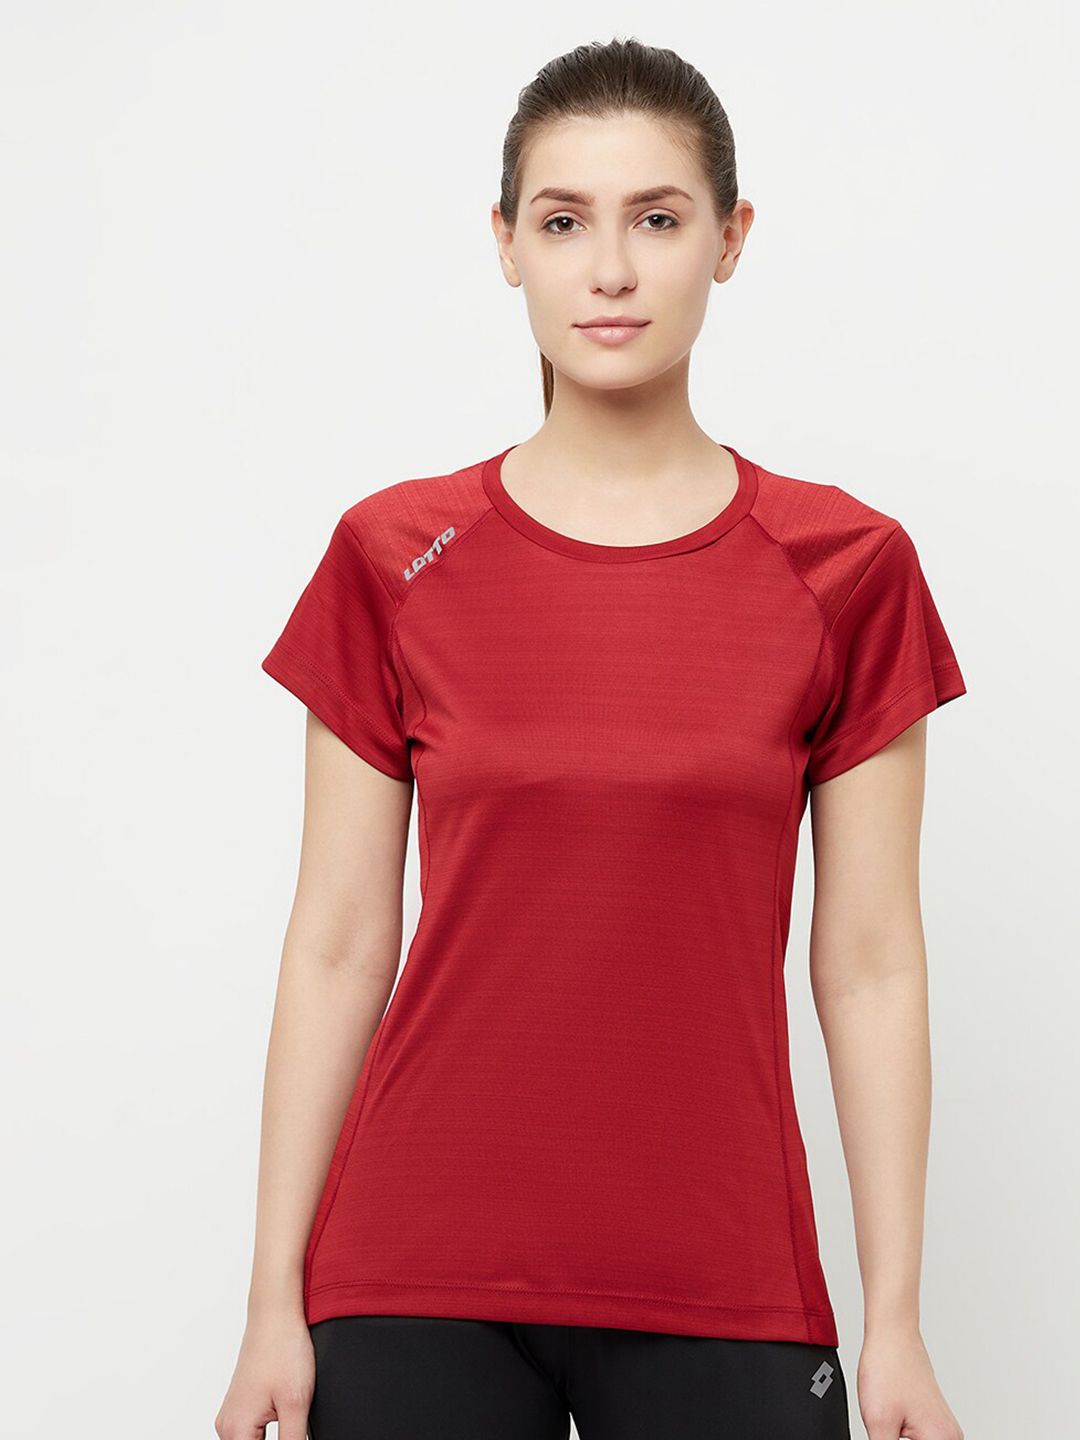 Lotto Women Maroon Raglan Sleeves Sports T-shirt Price in India